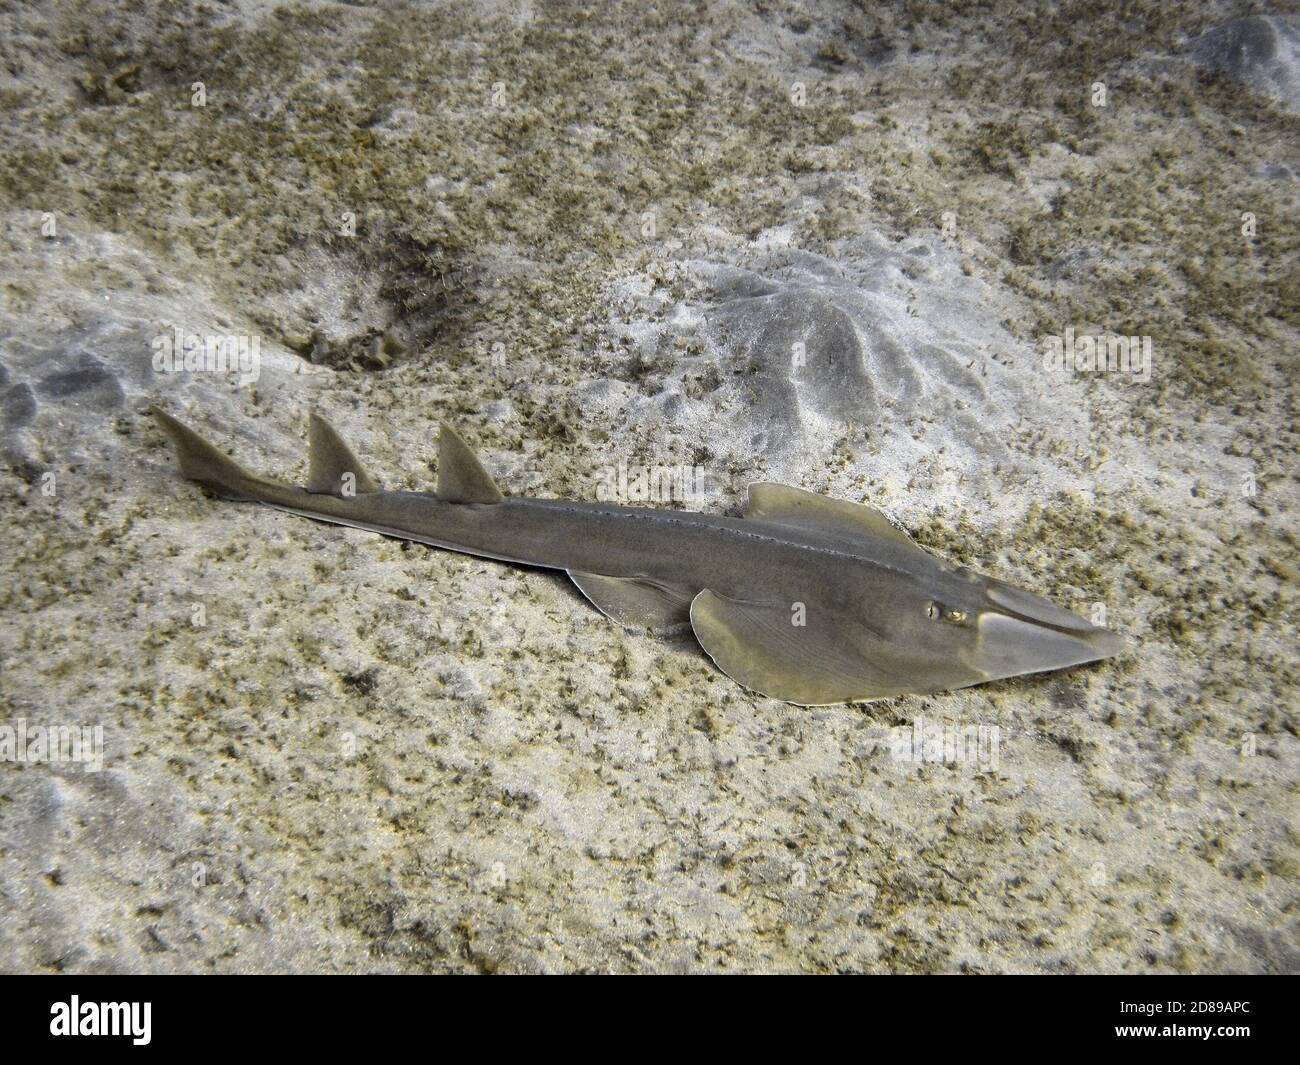 Halavi guitarfish (Rhinobatos halavi) on the sandy sea bottom Stock Photo